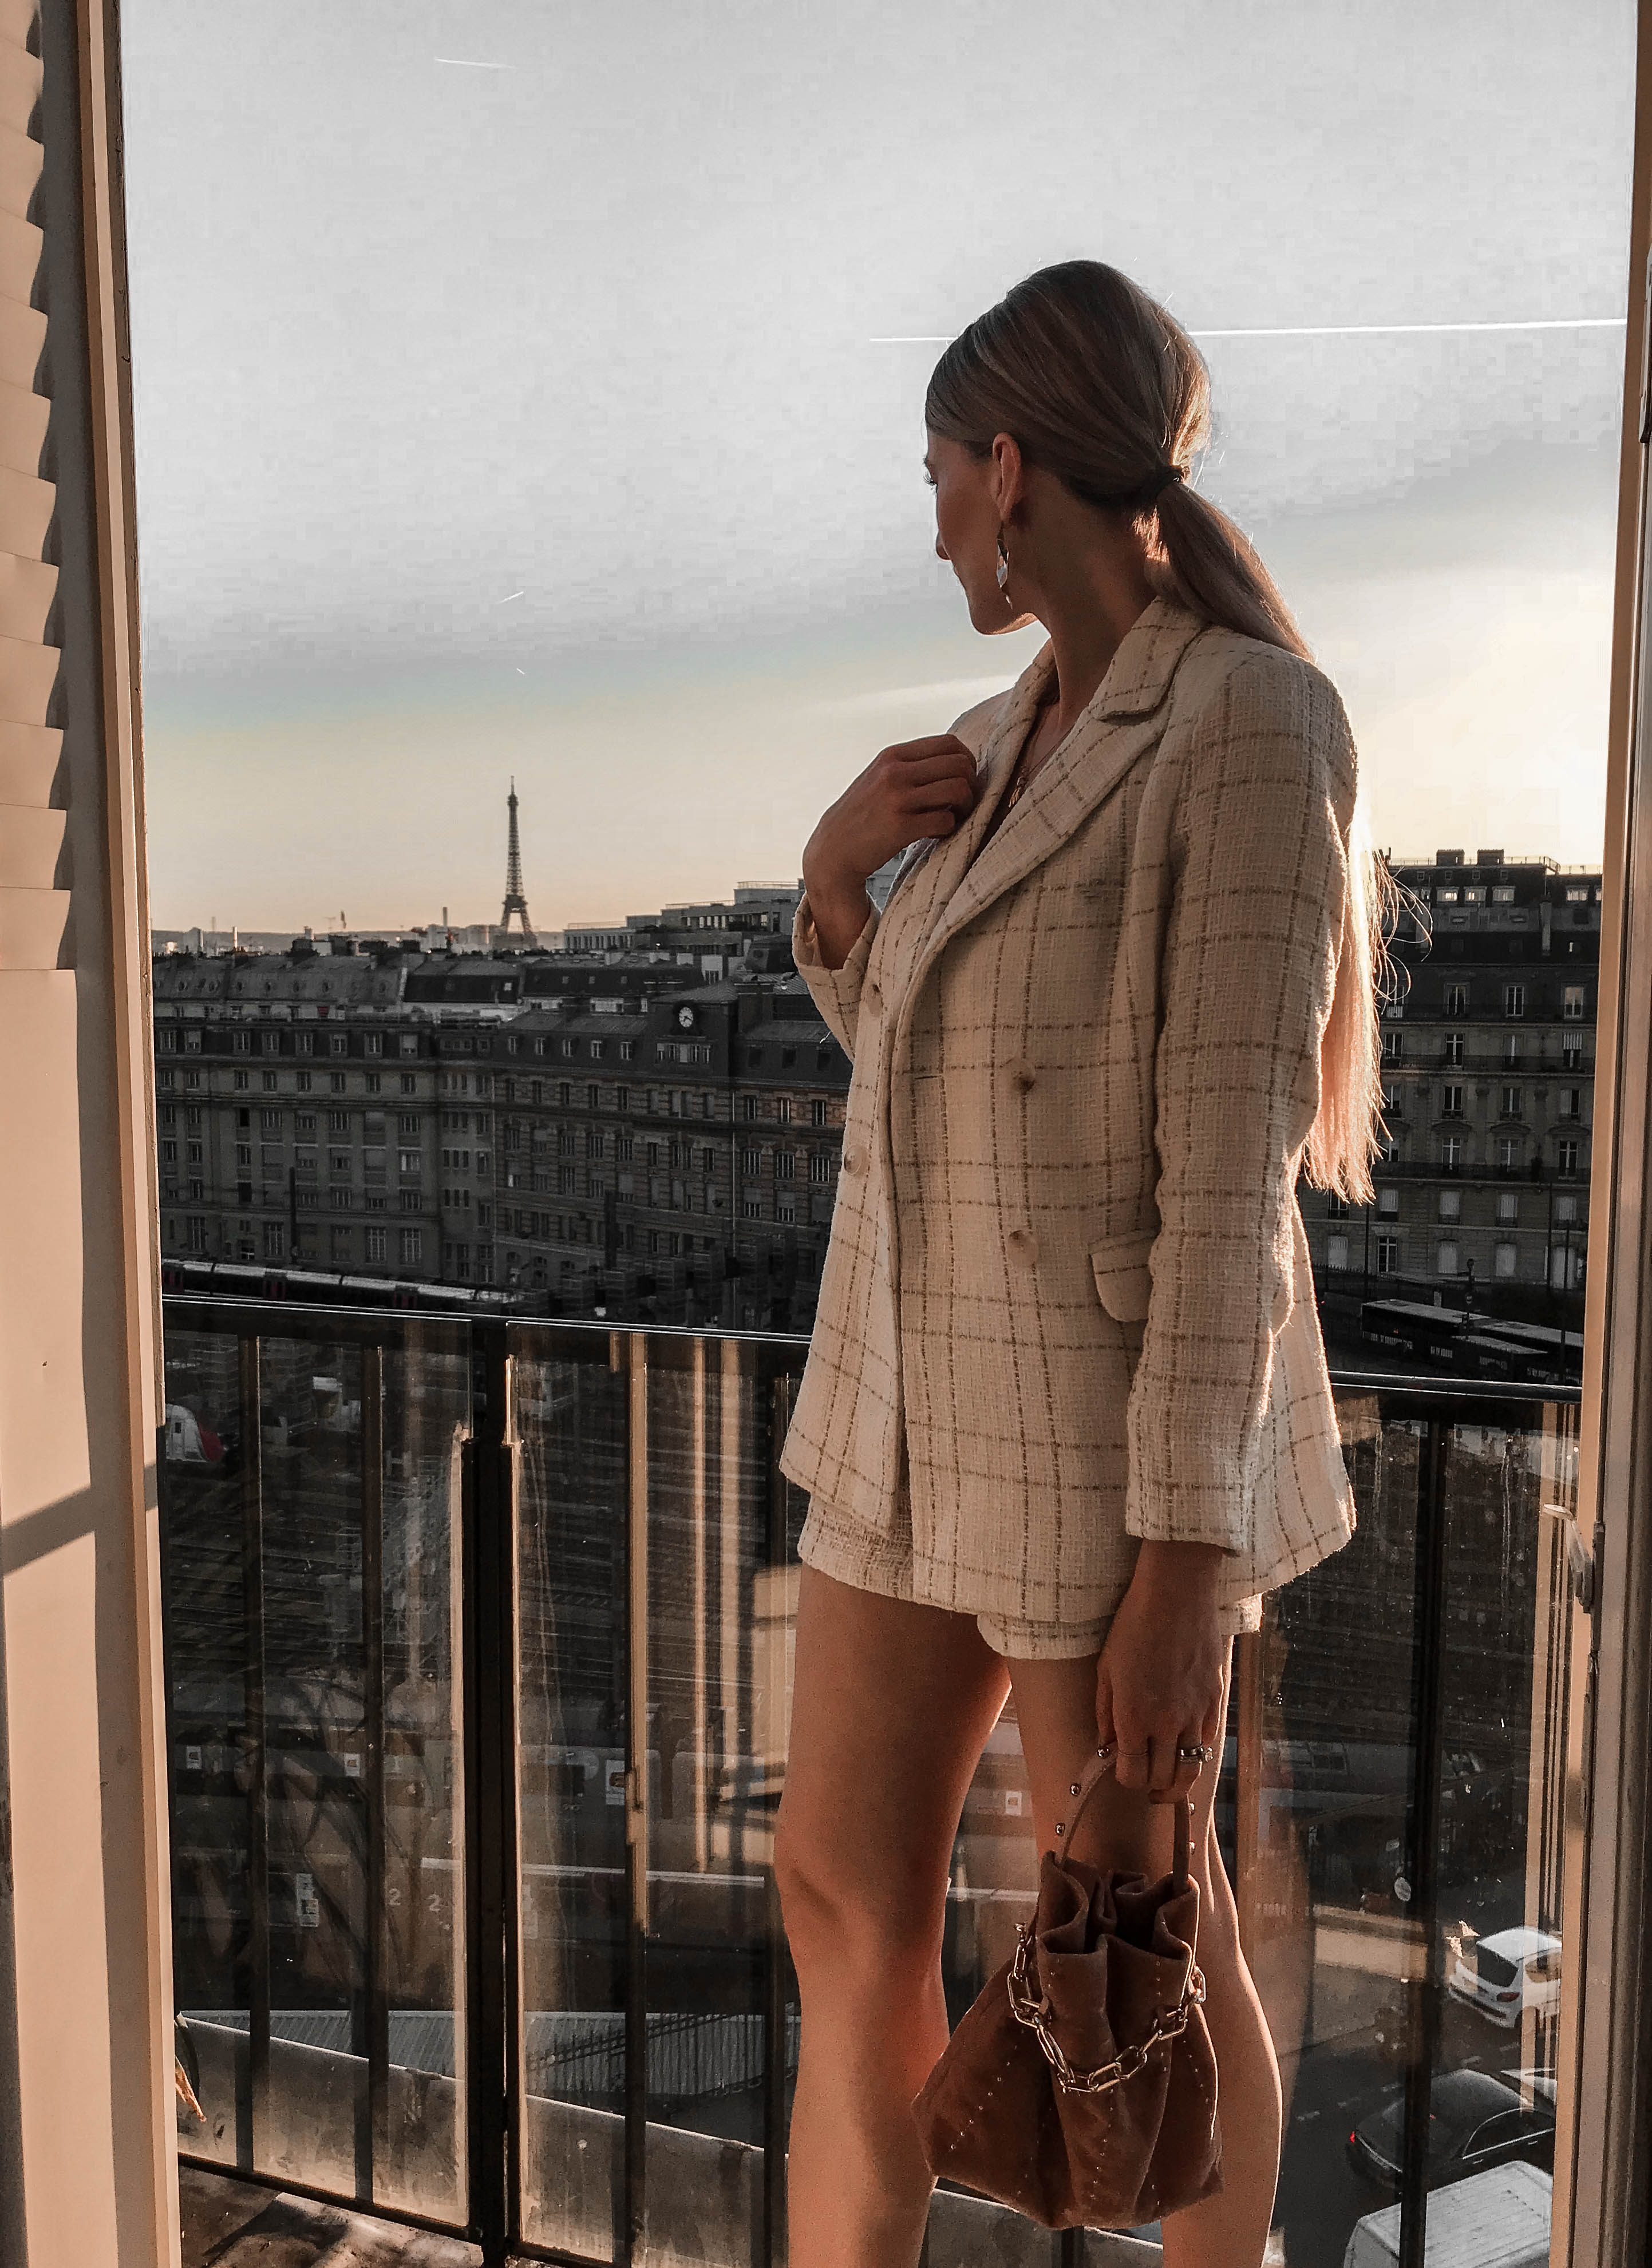 MON MODE / Fashion Blogger / Toronto Blogger | Paris | Atelier Cologne | L'Oreal | Paris Fashion Week 